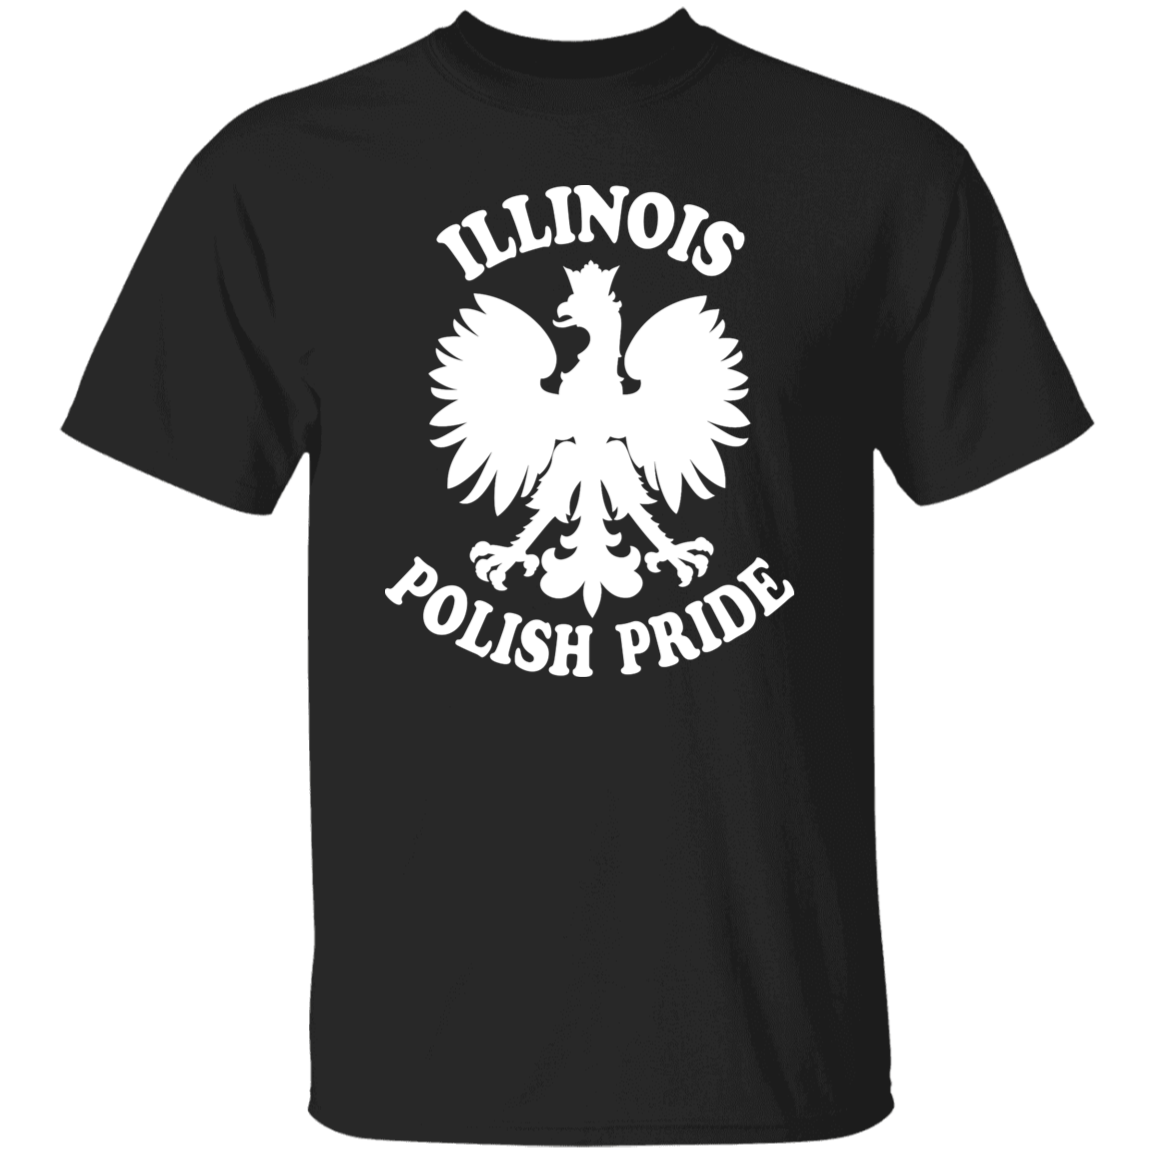 Illinois Polish Pride Apparel CustomCat G500 5.3 oz. T-Shirt Black S